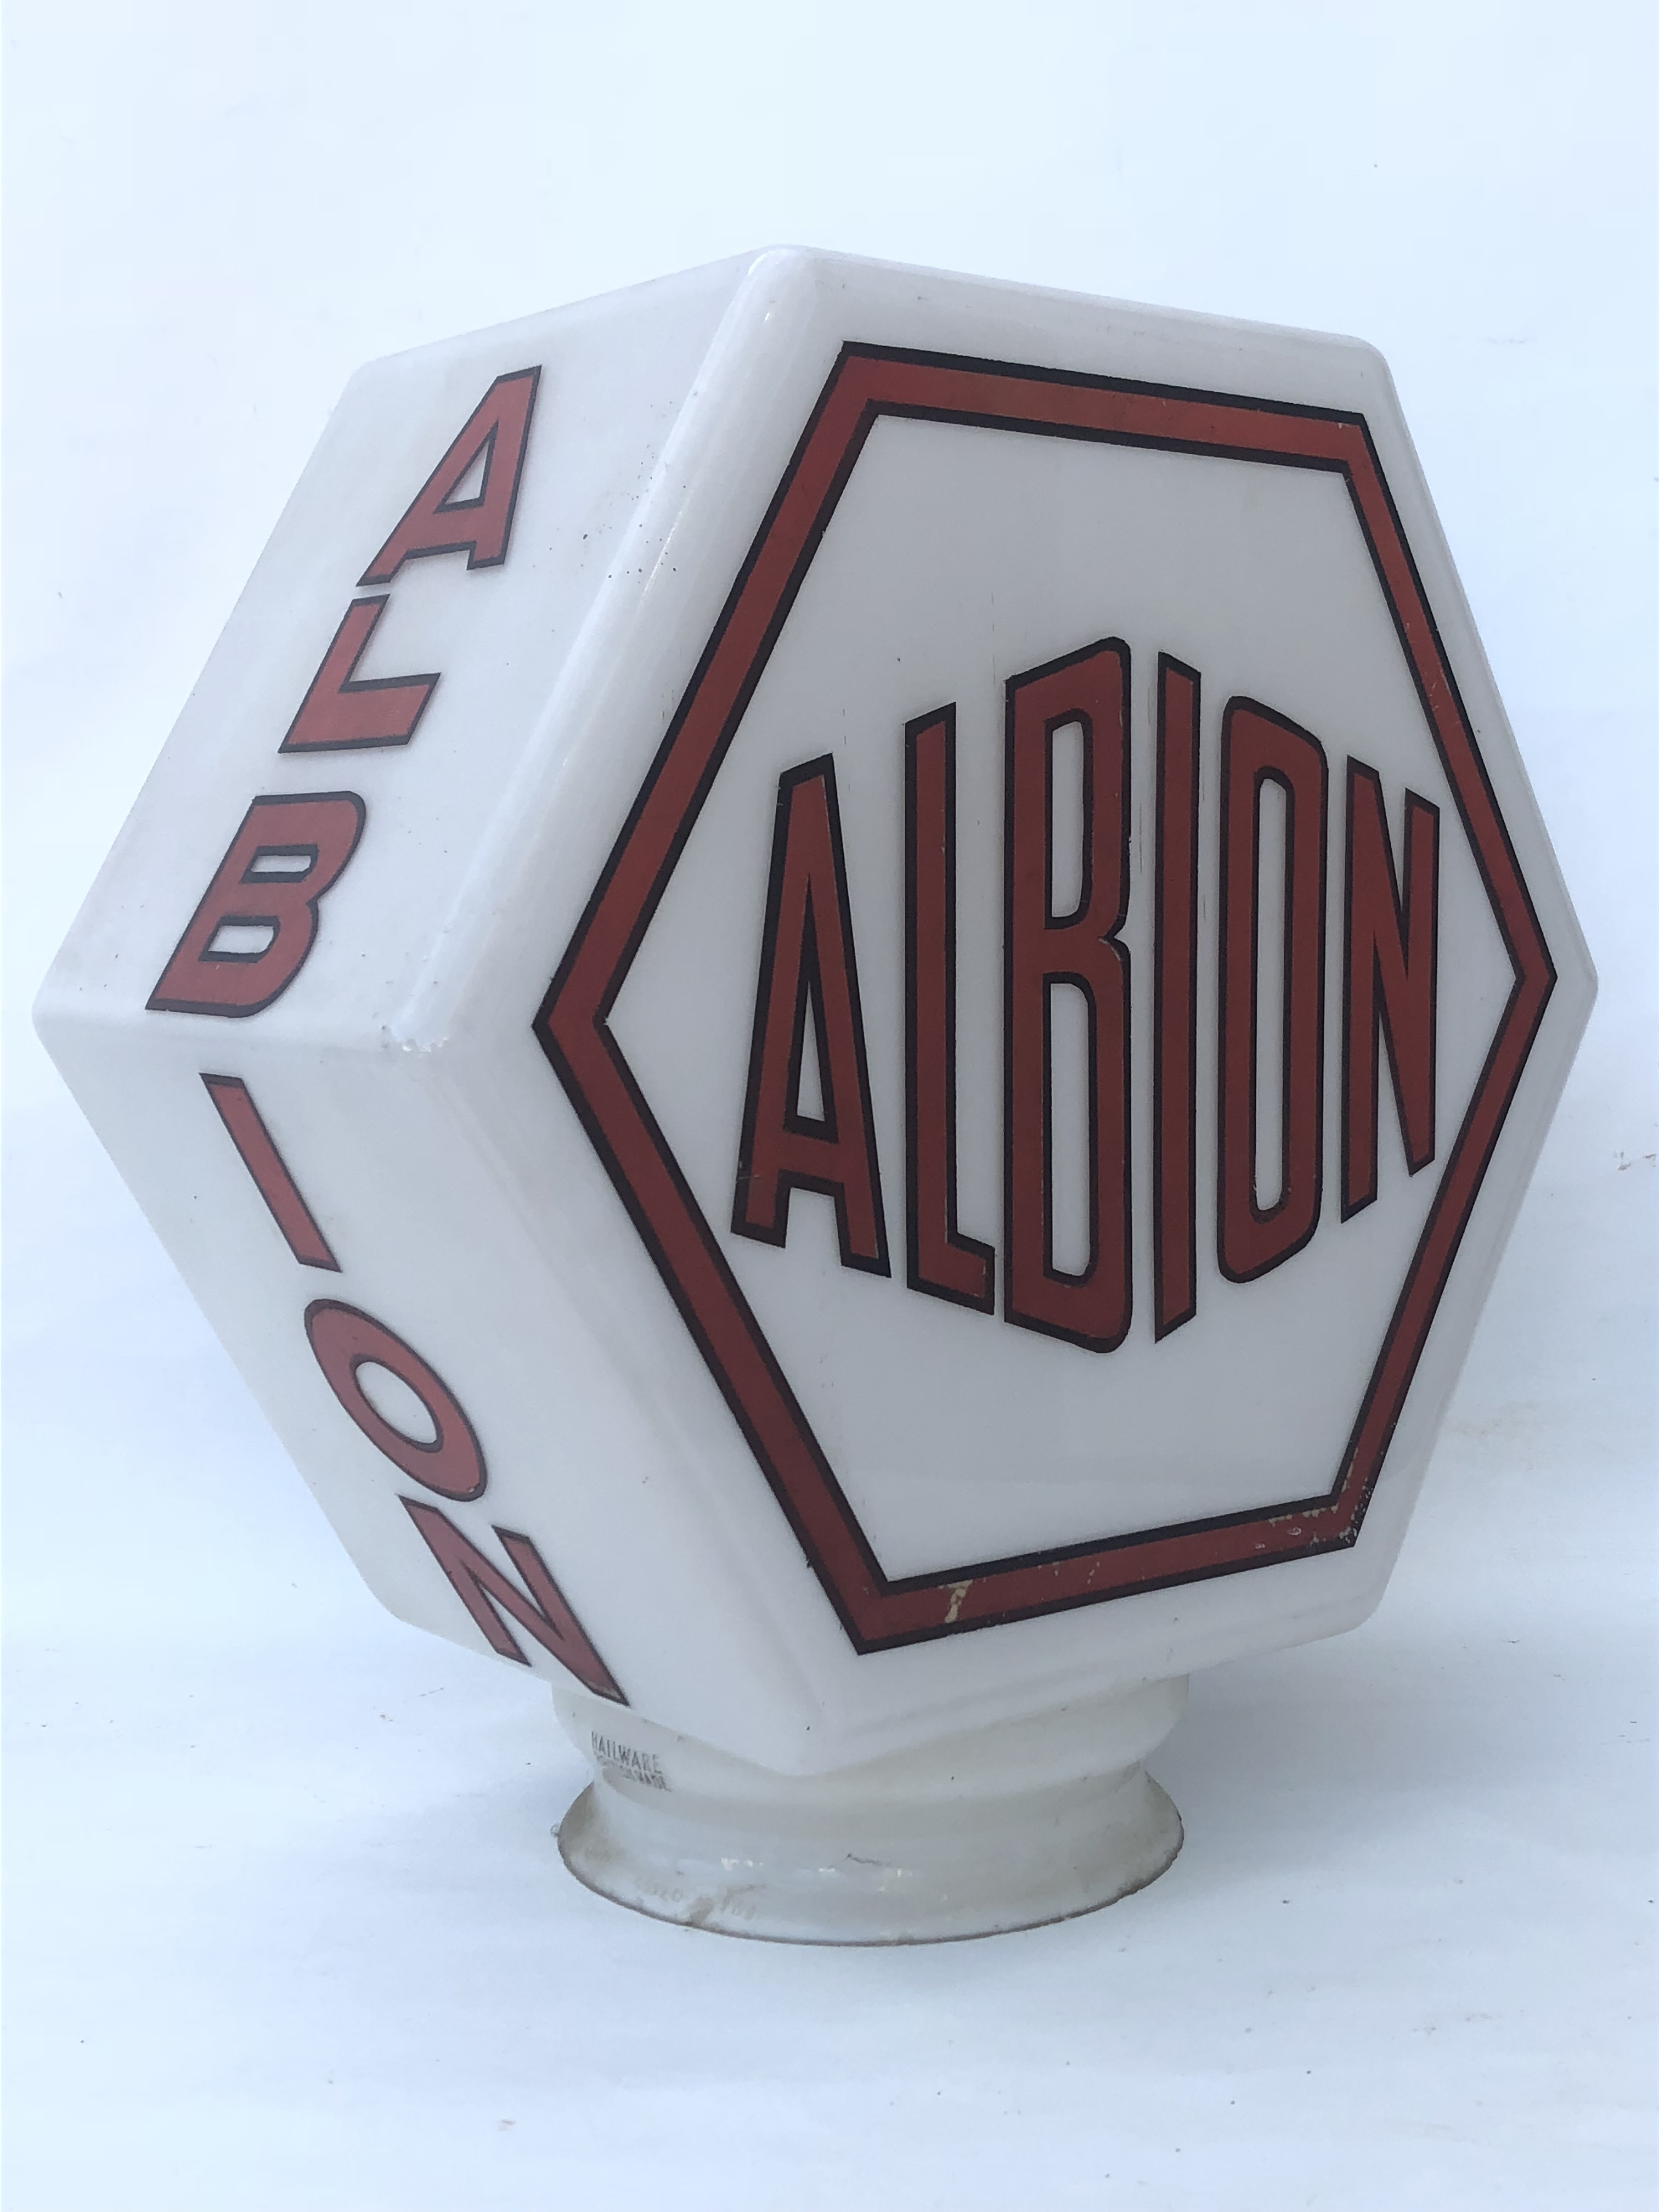 Albion globe